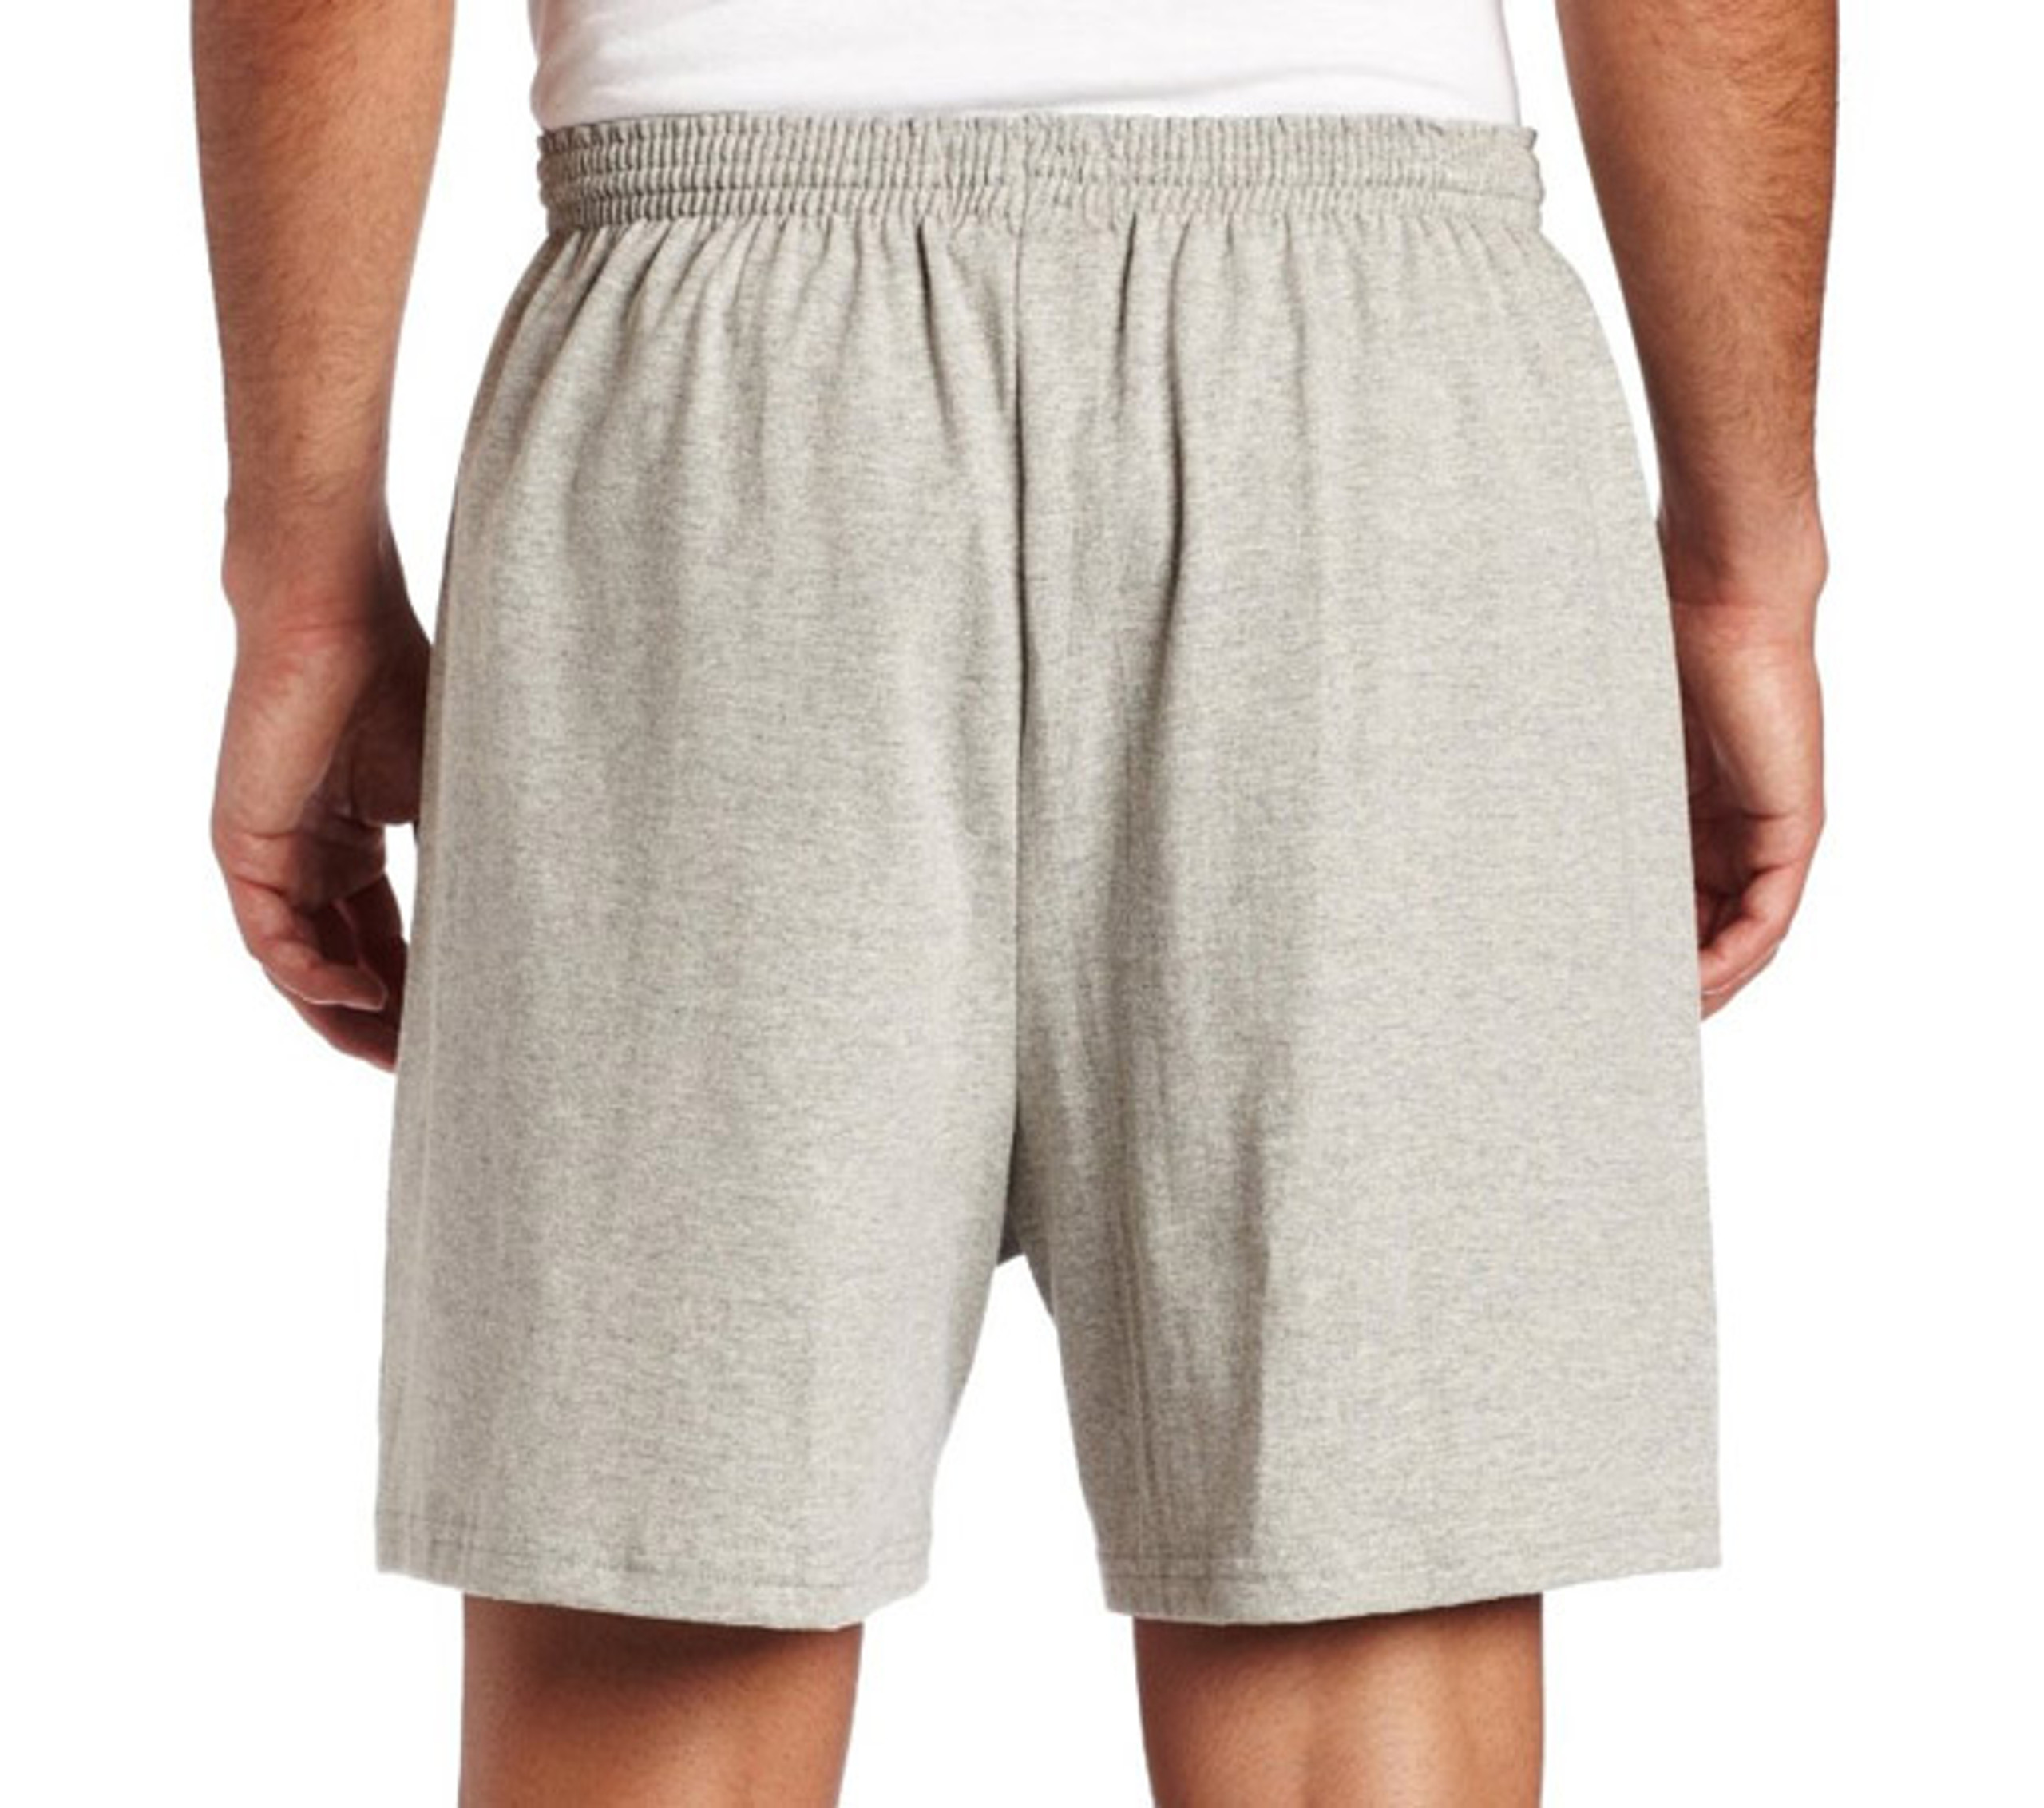 Men's athletic shorts | 7